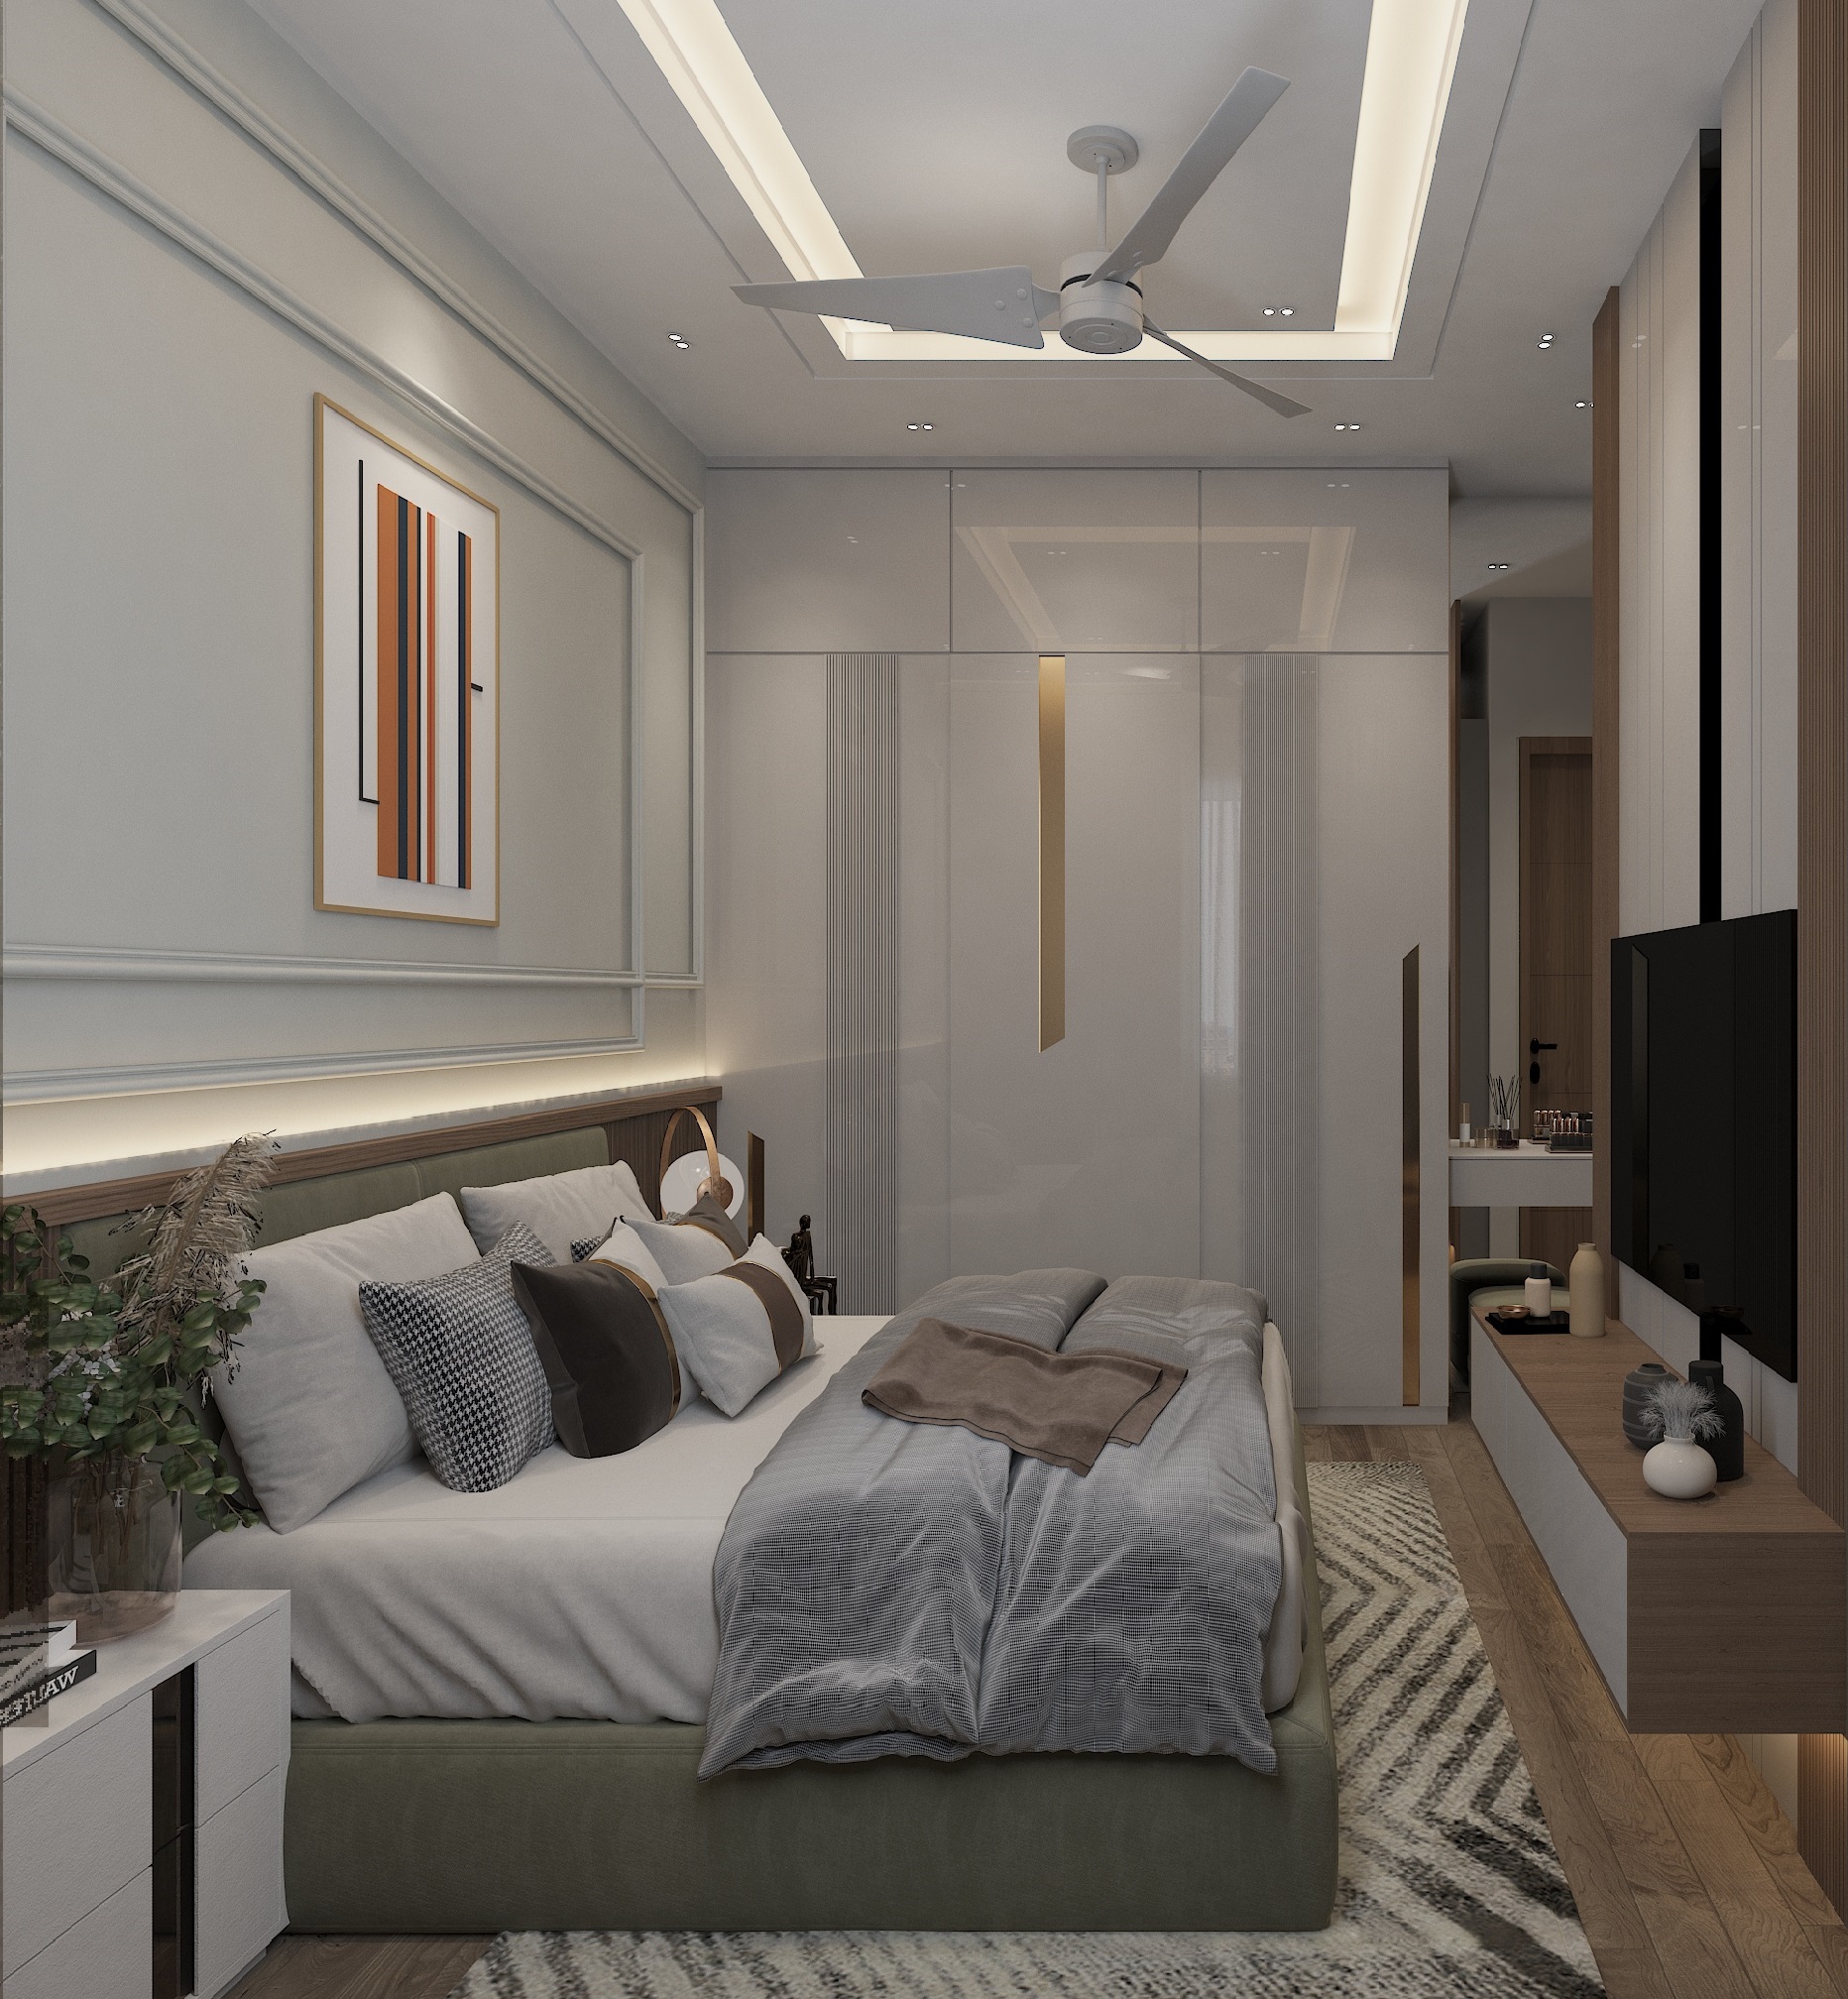 luxary bedroom interior design